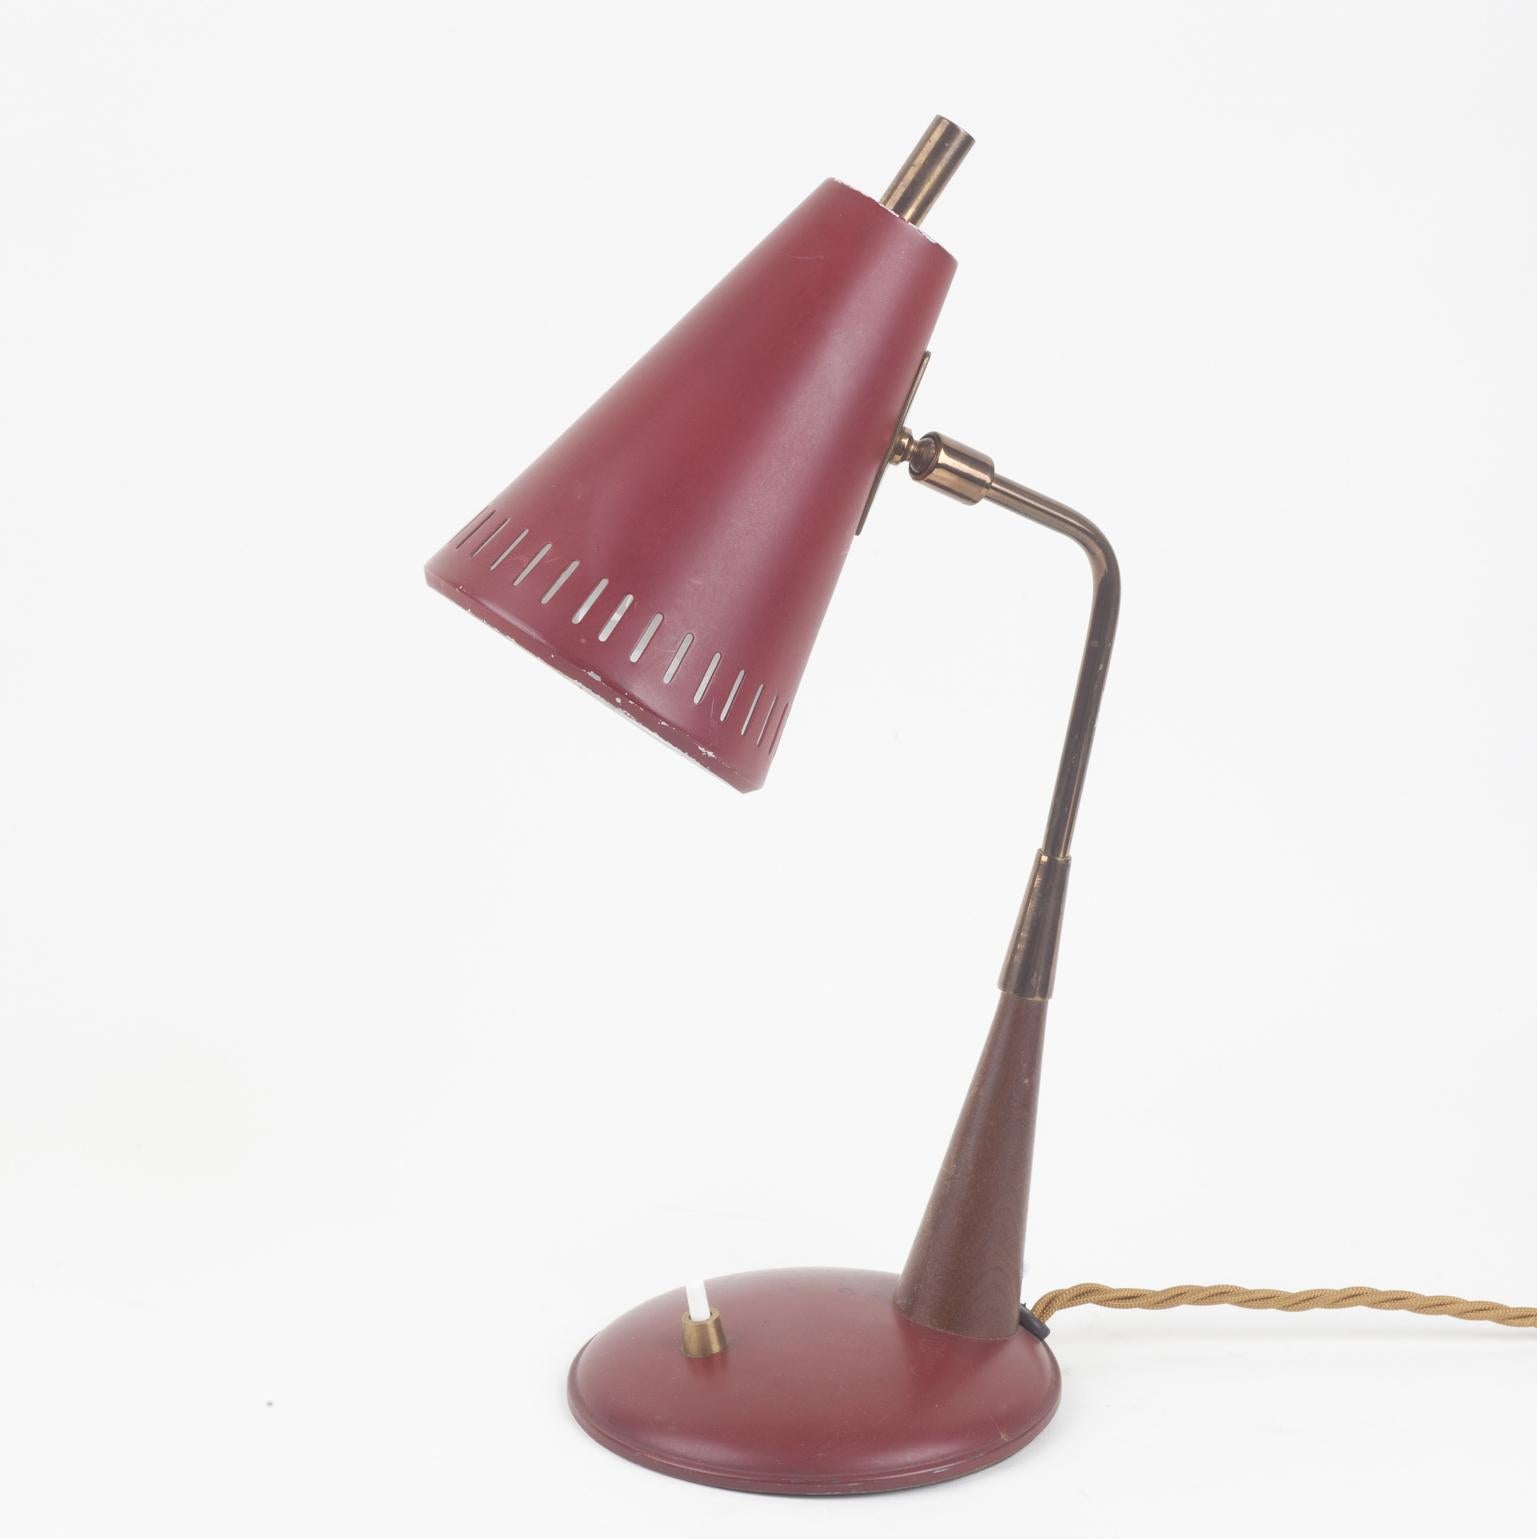 Articulated Mid-Century Modern desk lamp in dark red metal on Teak wood and brass arm is Modernist in design.